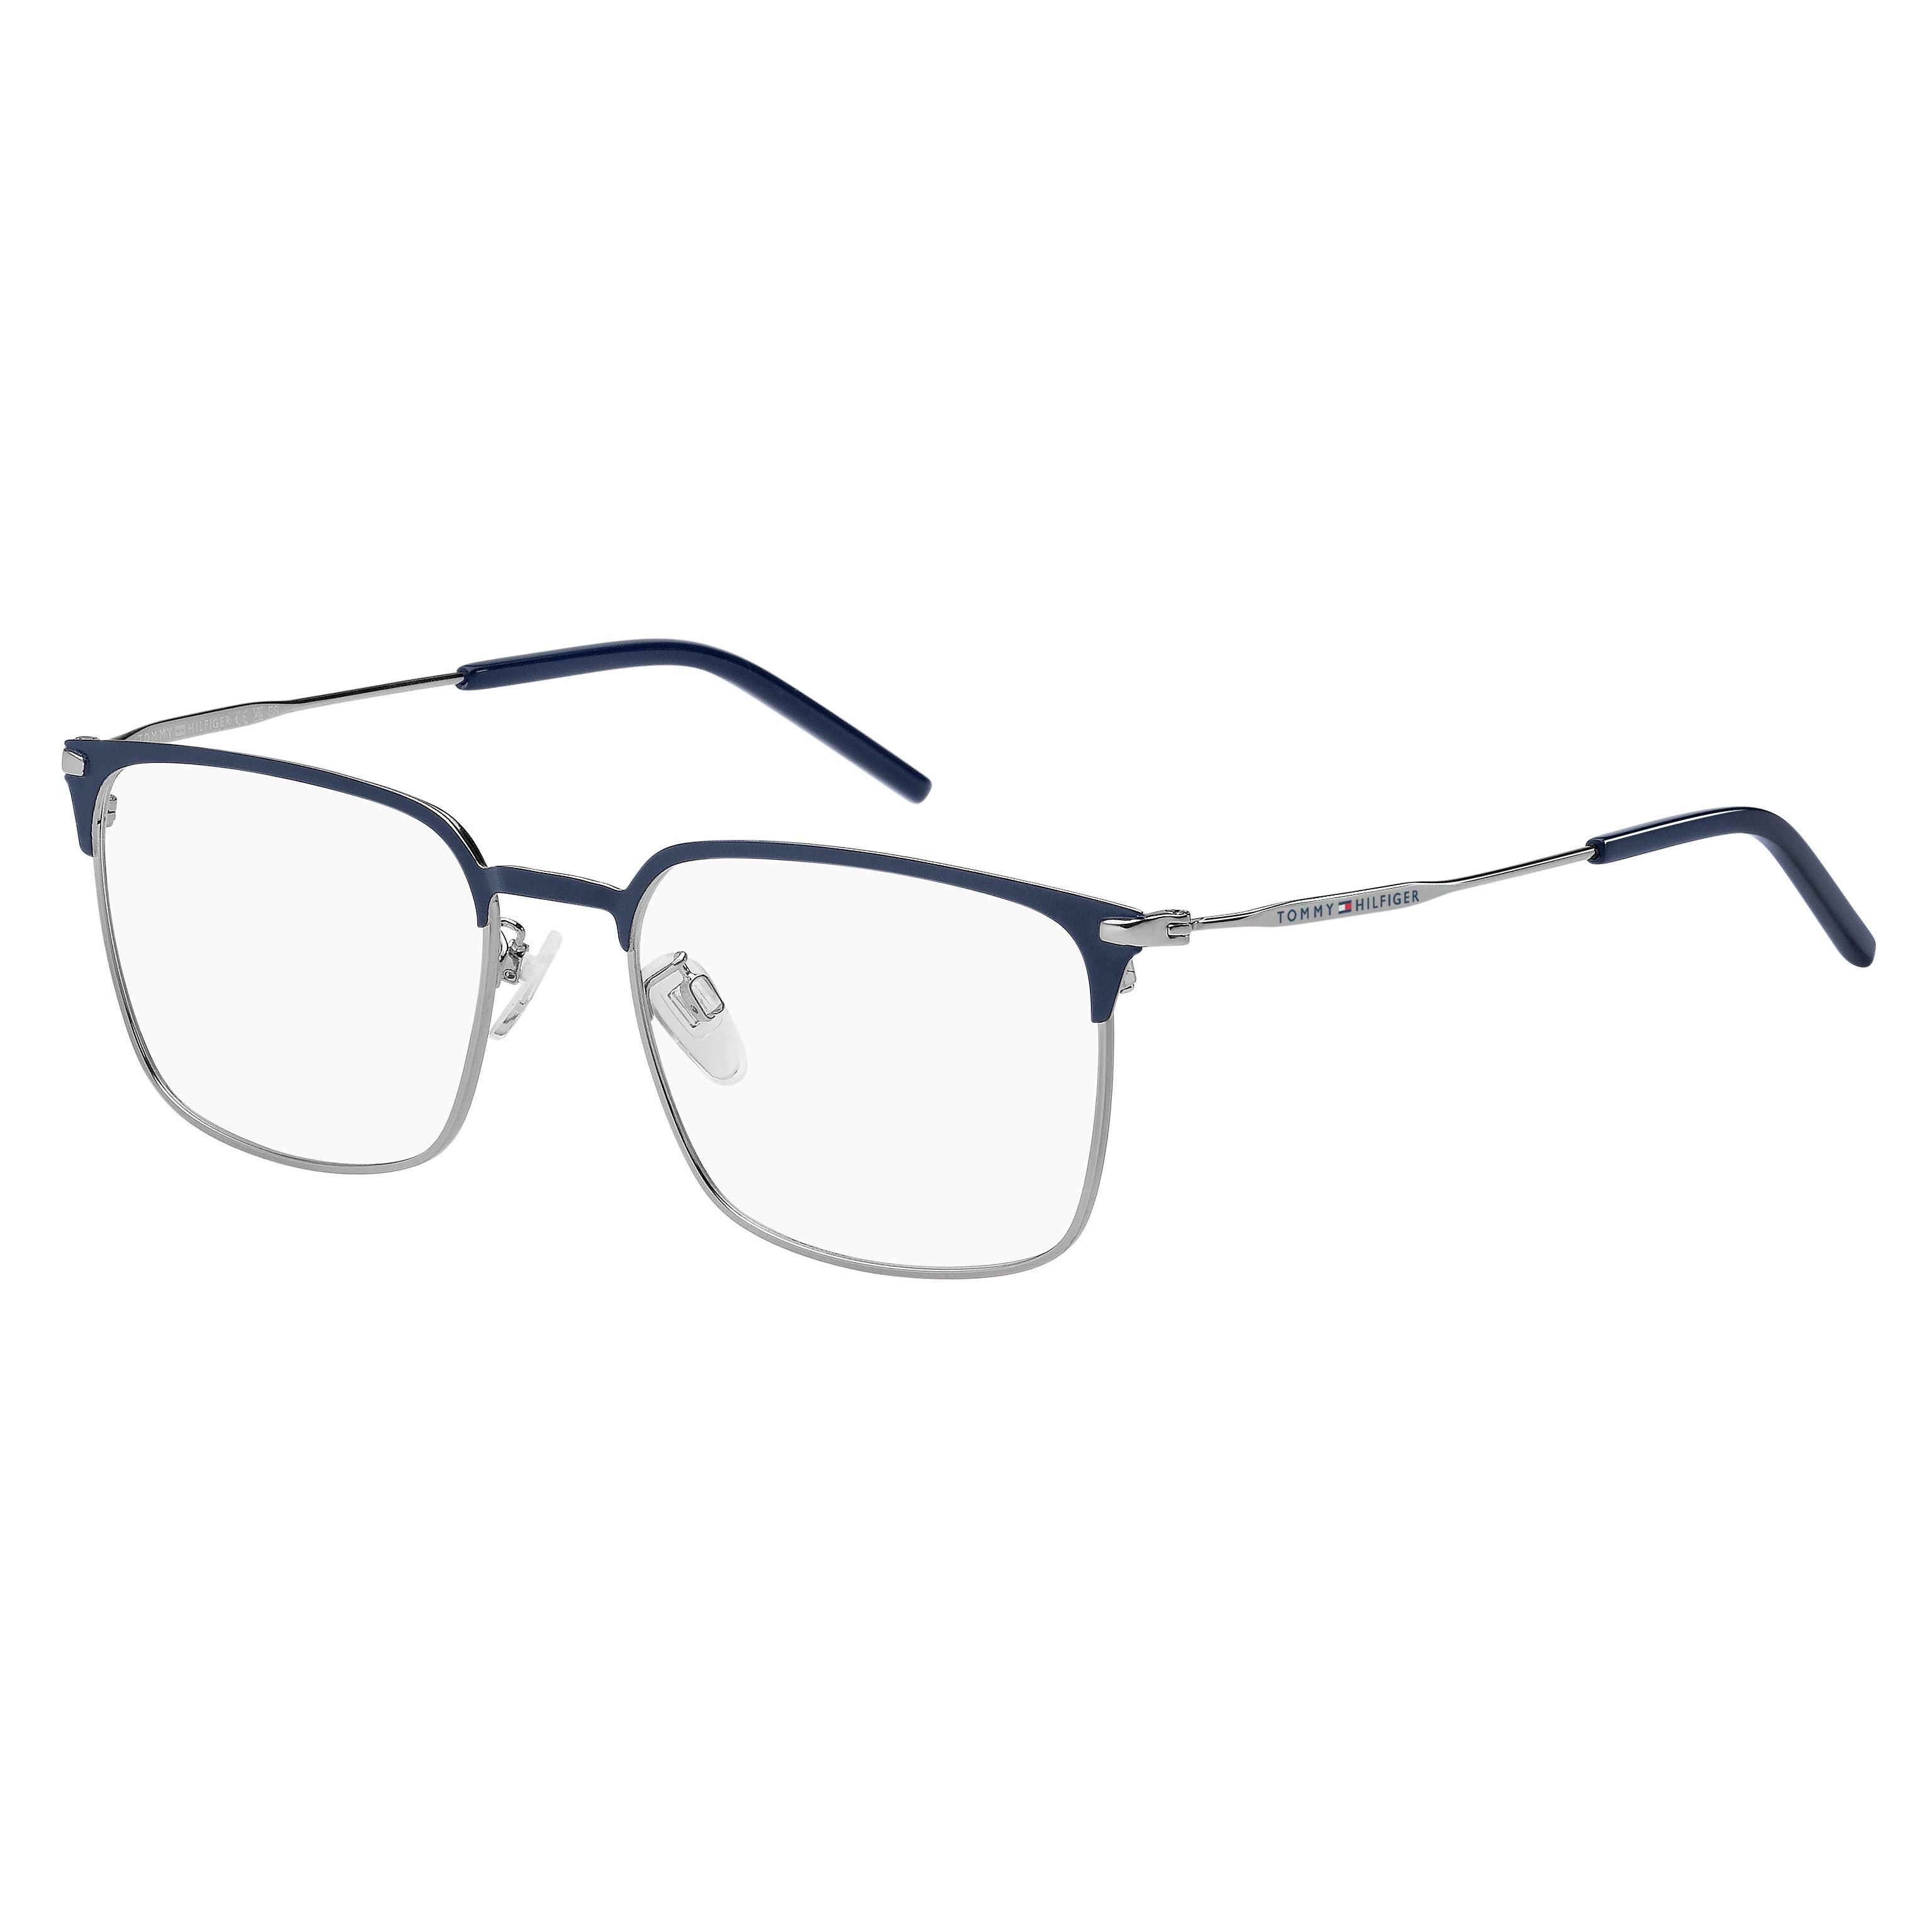 TH 2062 G Square Eyeglasses KU0 - size 54